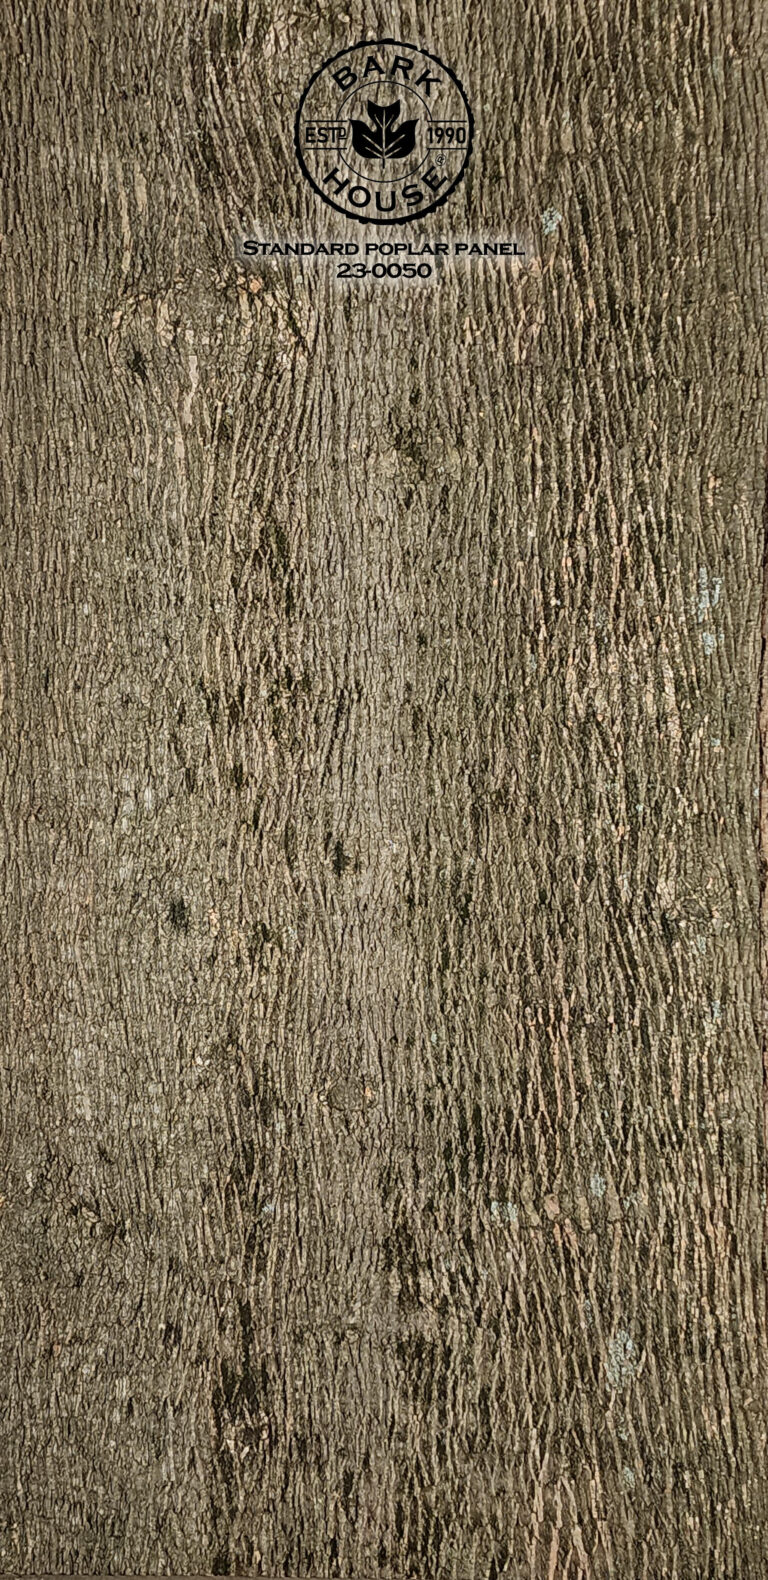 Bark House poplar bark panel SKU POPP-STD-23-0050